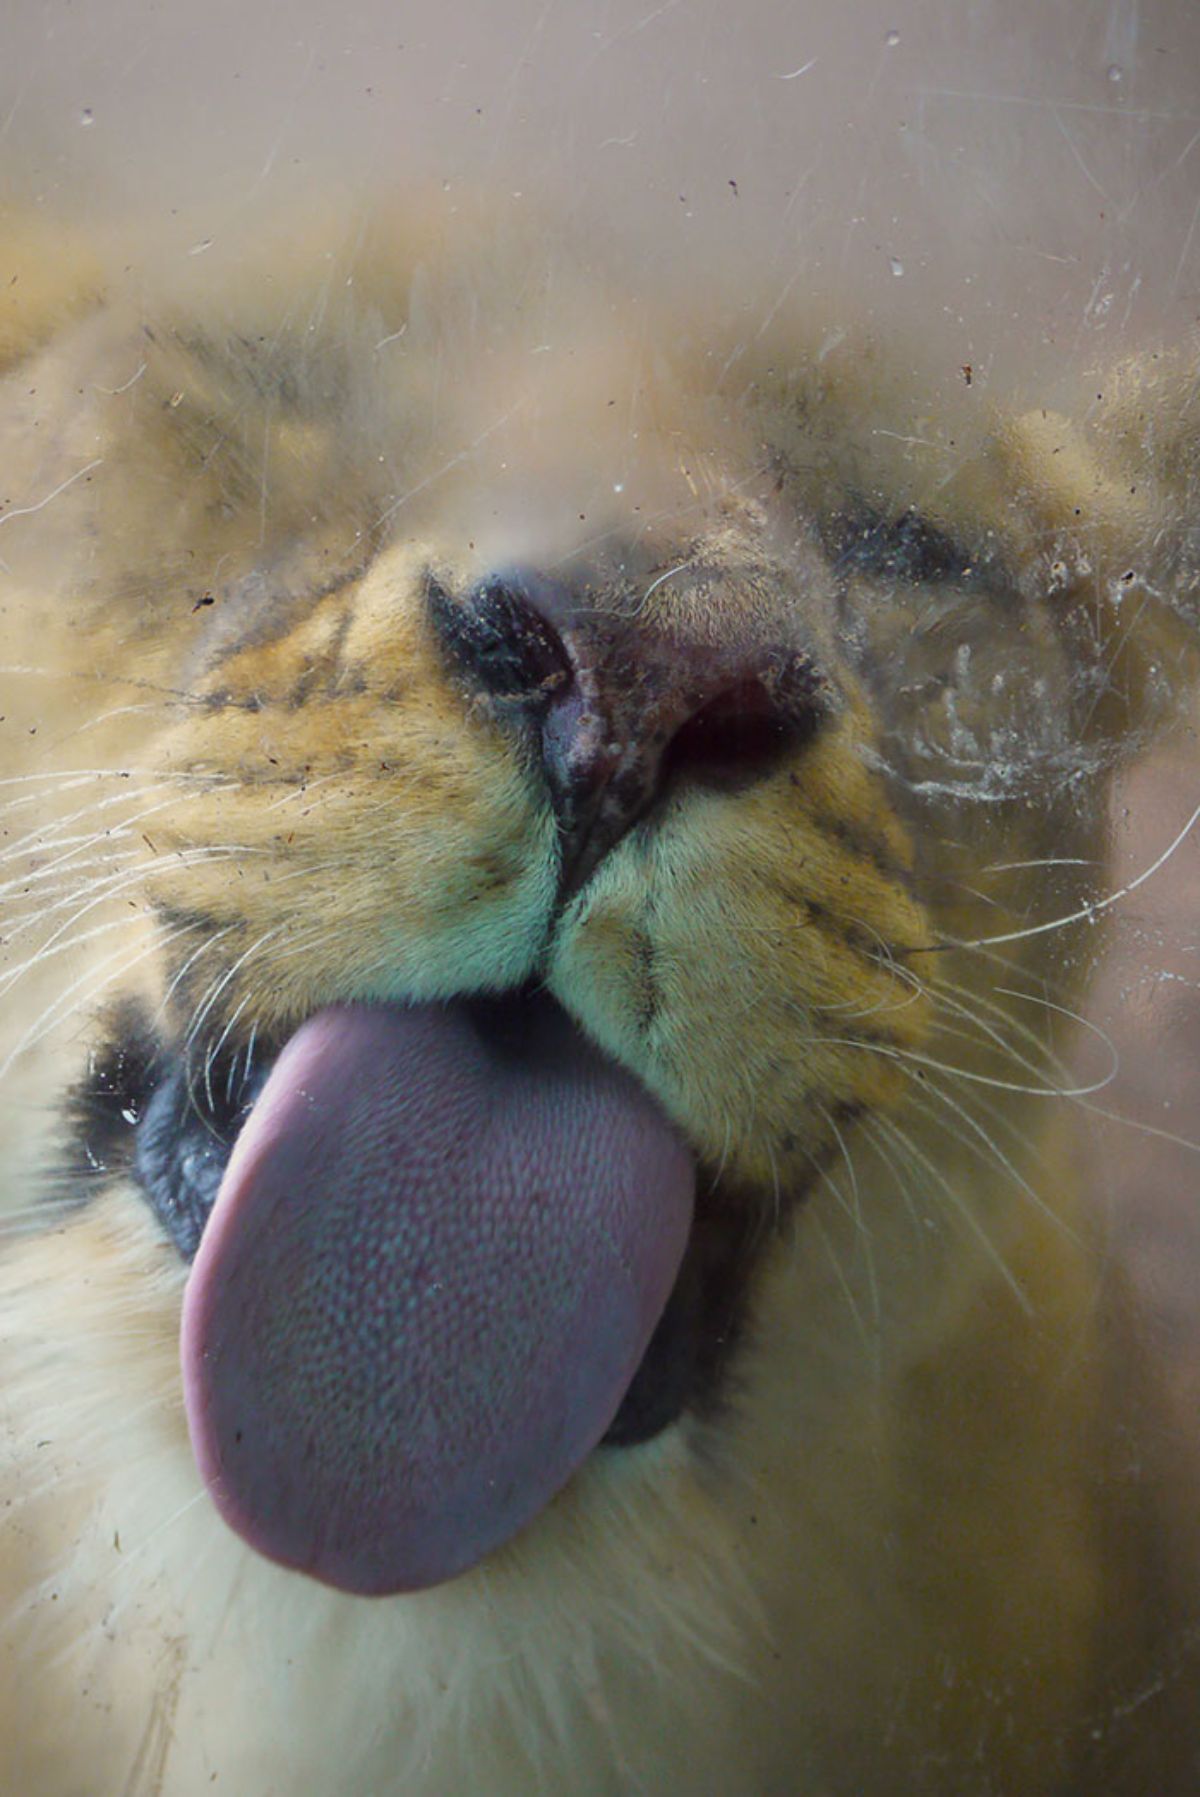 lion licking a glass